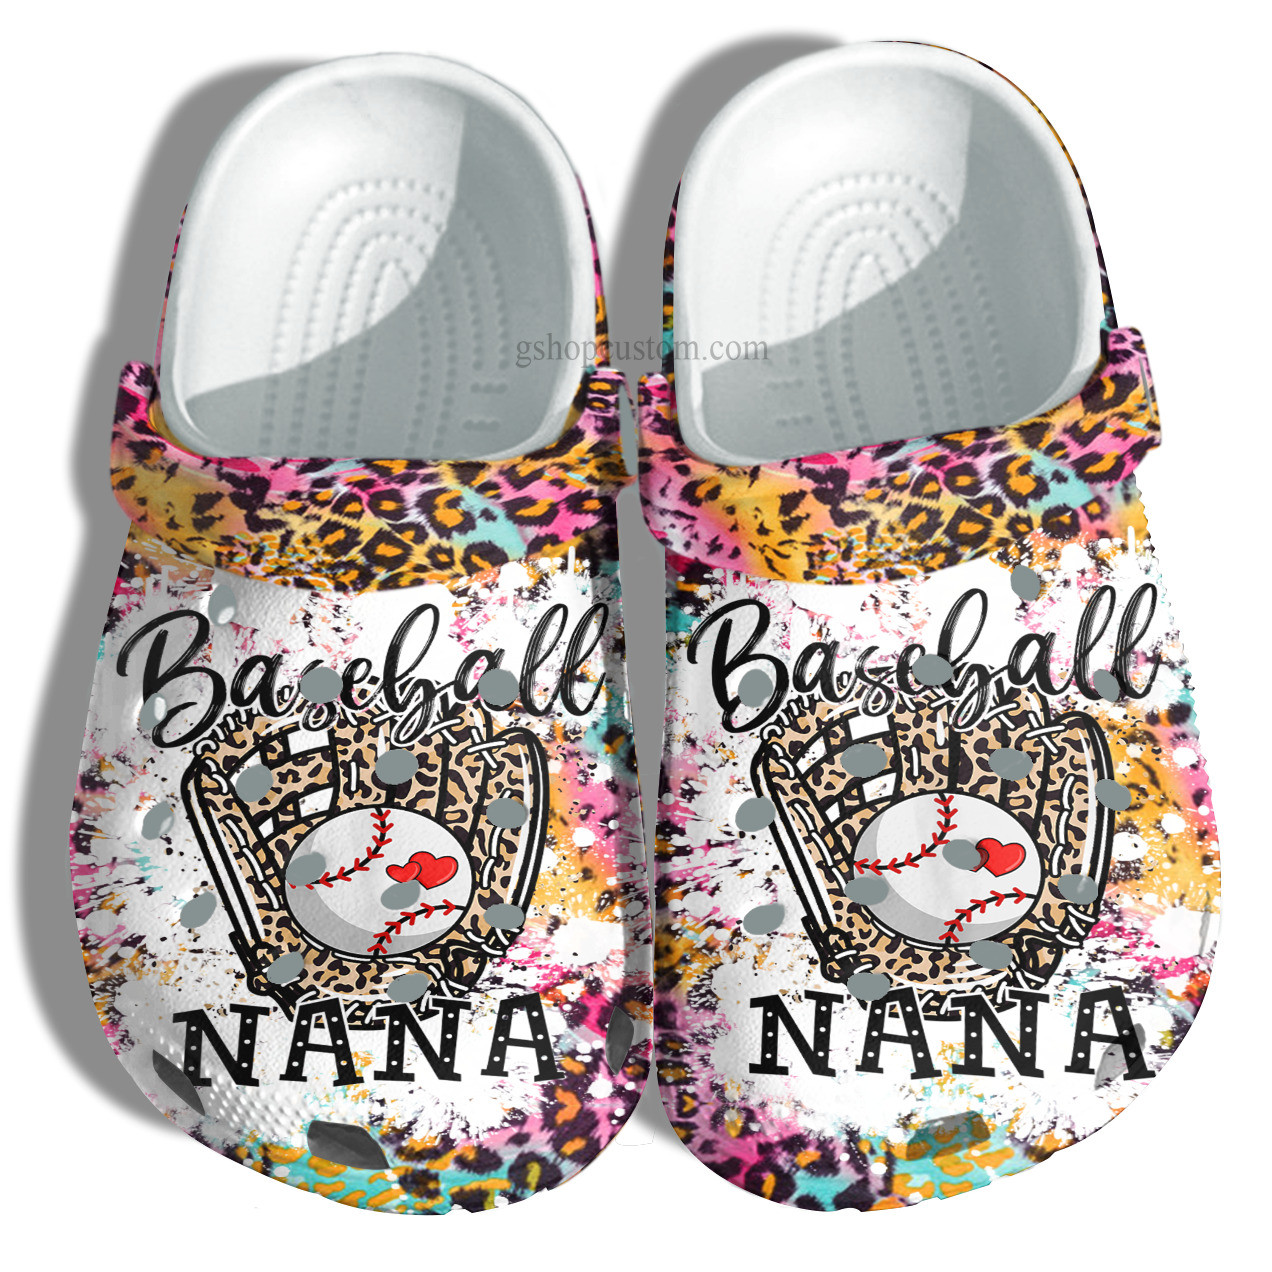 Nana Baseball Leopard Skin Crocs Shoes Customize Name For Grandma – Baseball Hippie Shoes Croc Clogs Mother Day – Cr-Ne0113